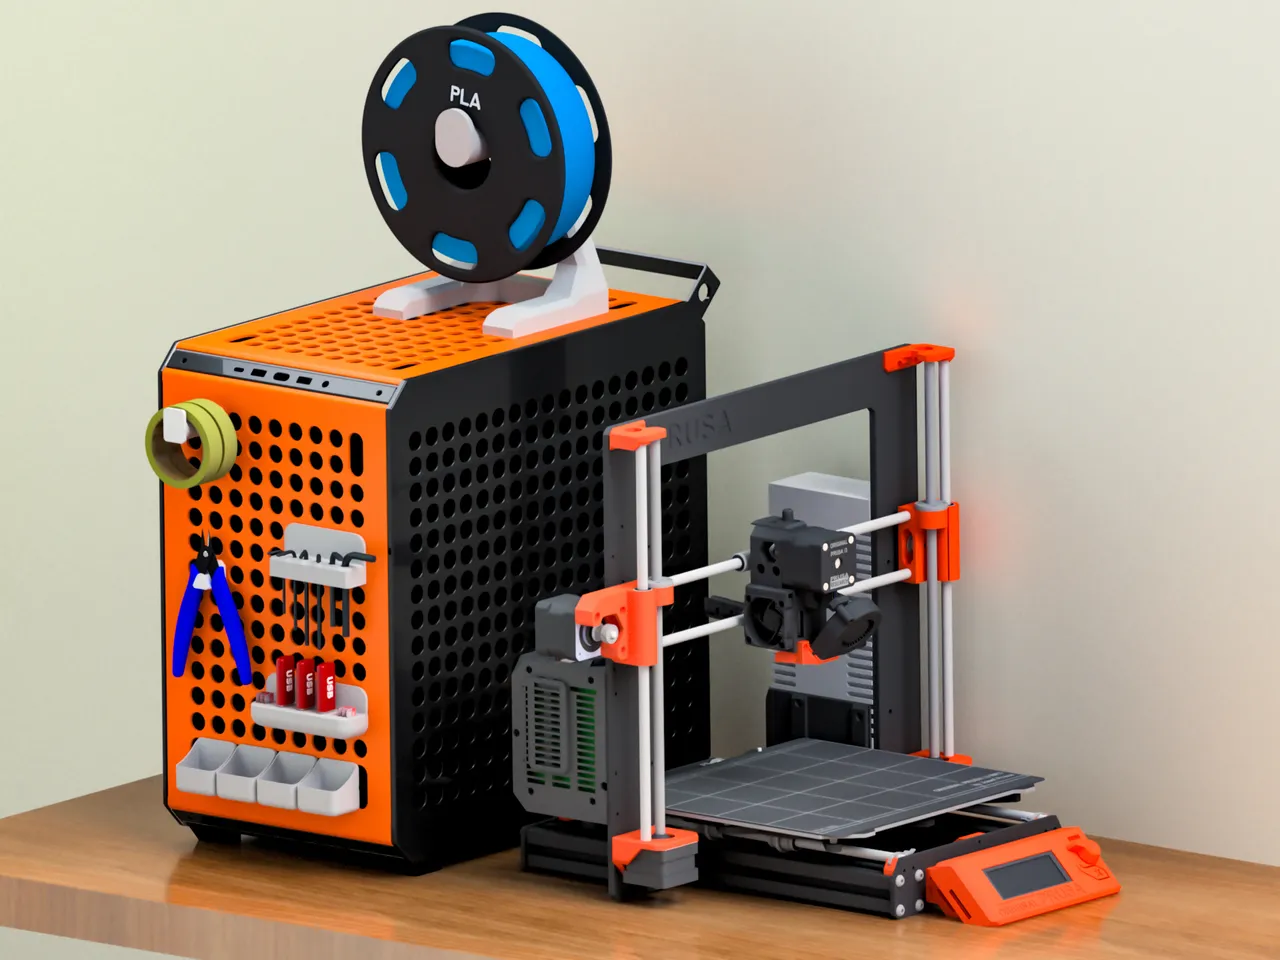 Printables.com Contest: Cooler Master QUBE 500 PC Case Accessories -  Original Prusa 3D Printers